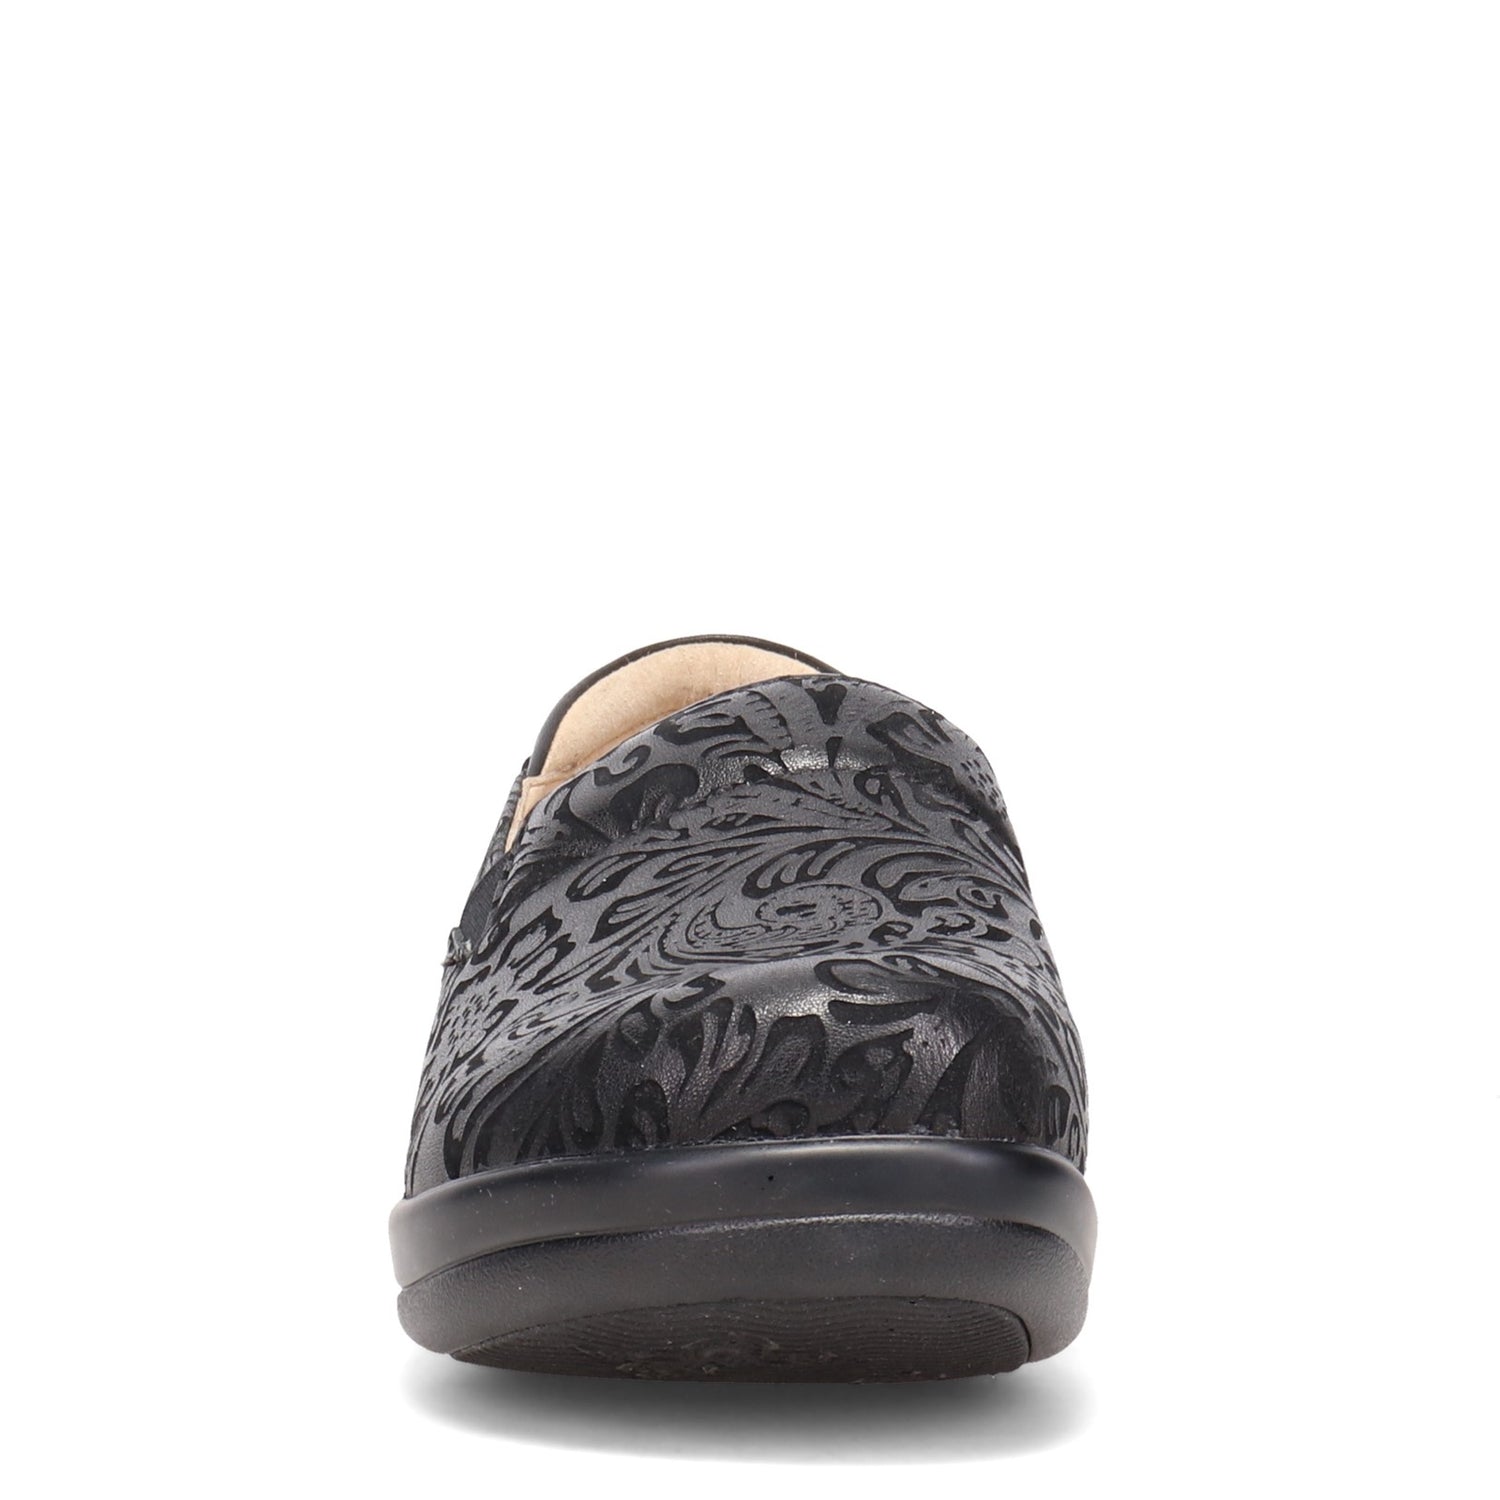 Peltz Shoes  Women's Alegria Keli Professional Clog Black Embossed Paisley KEL-431